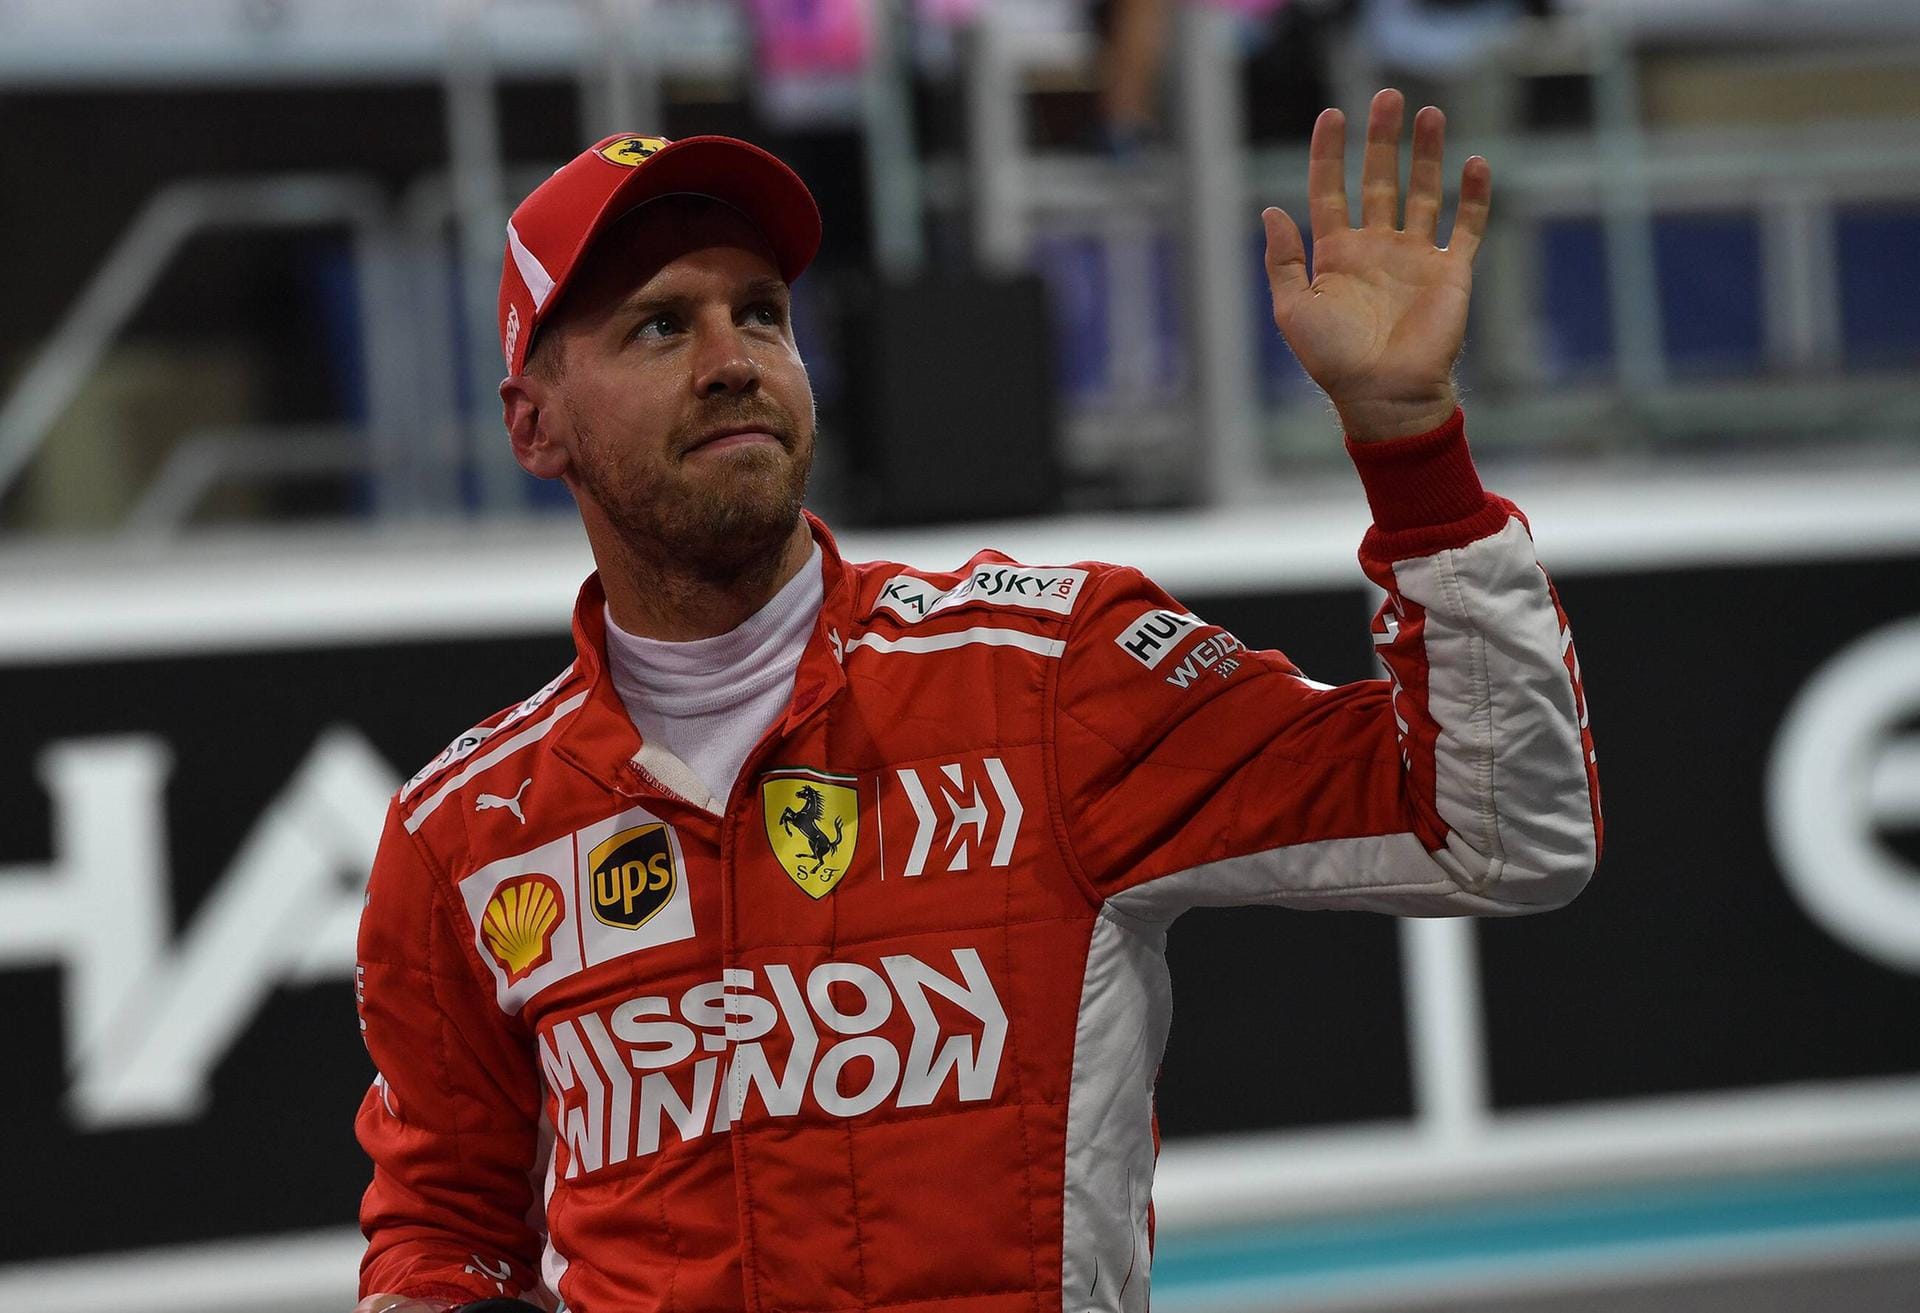 Ferrari: Sebastian Vettel